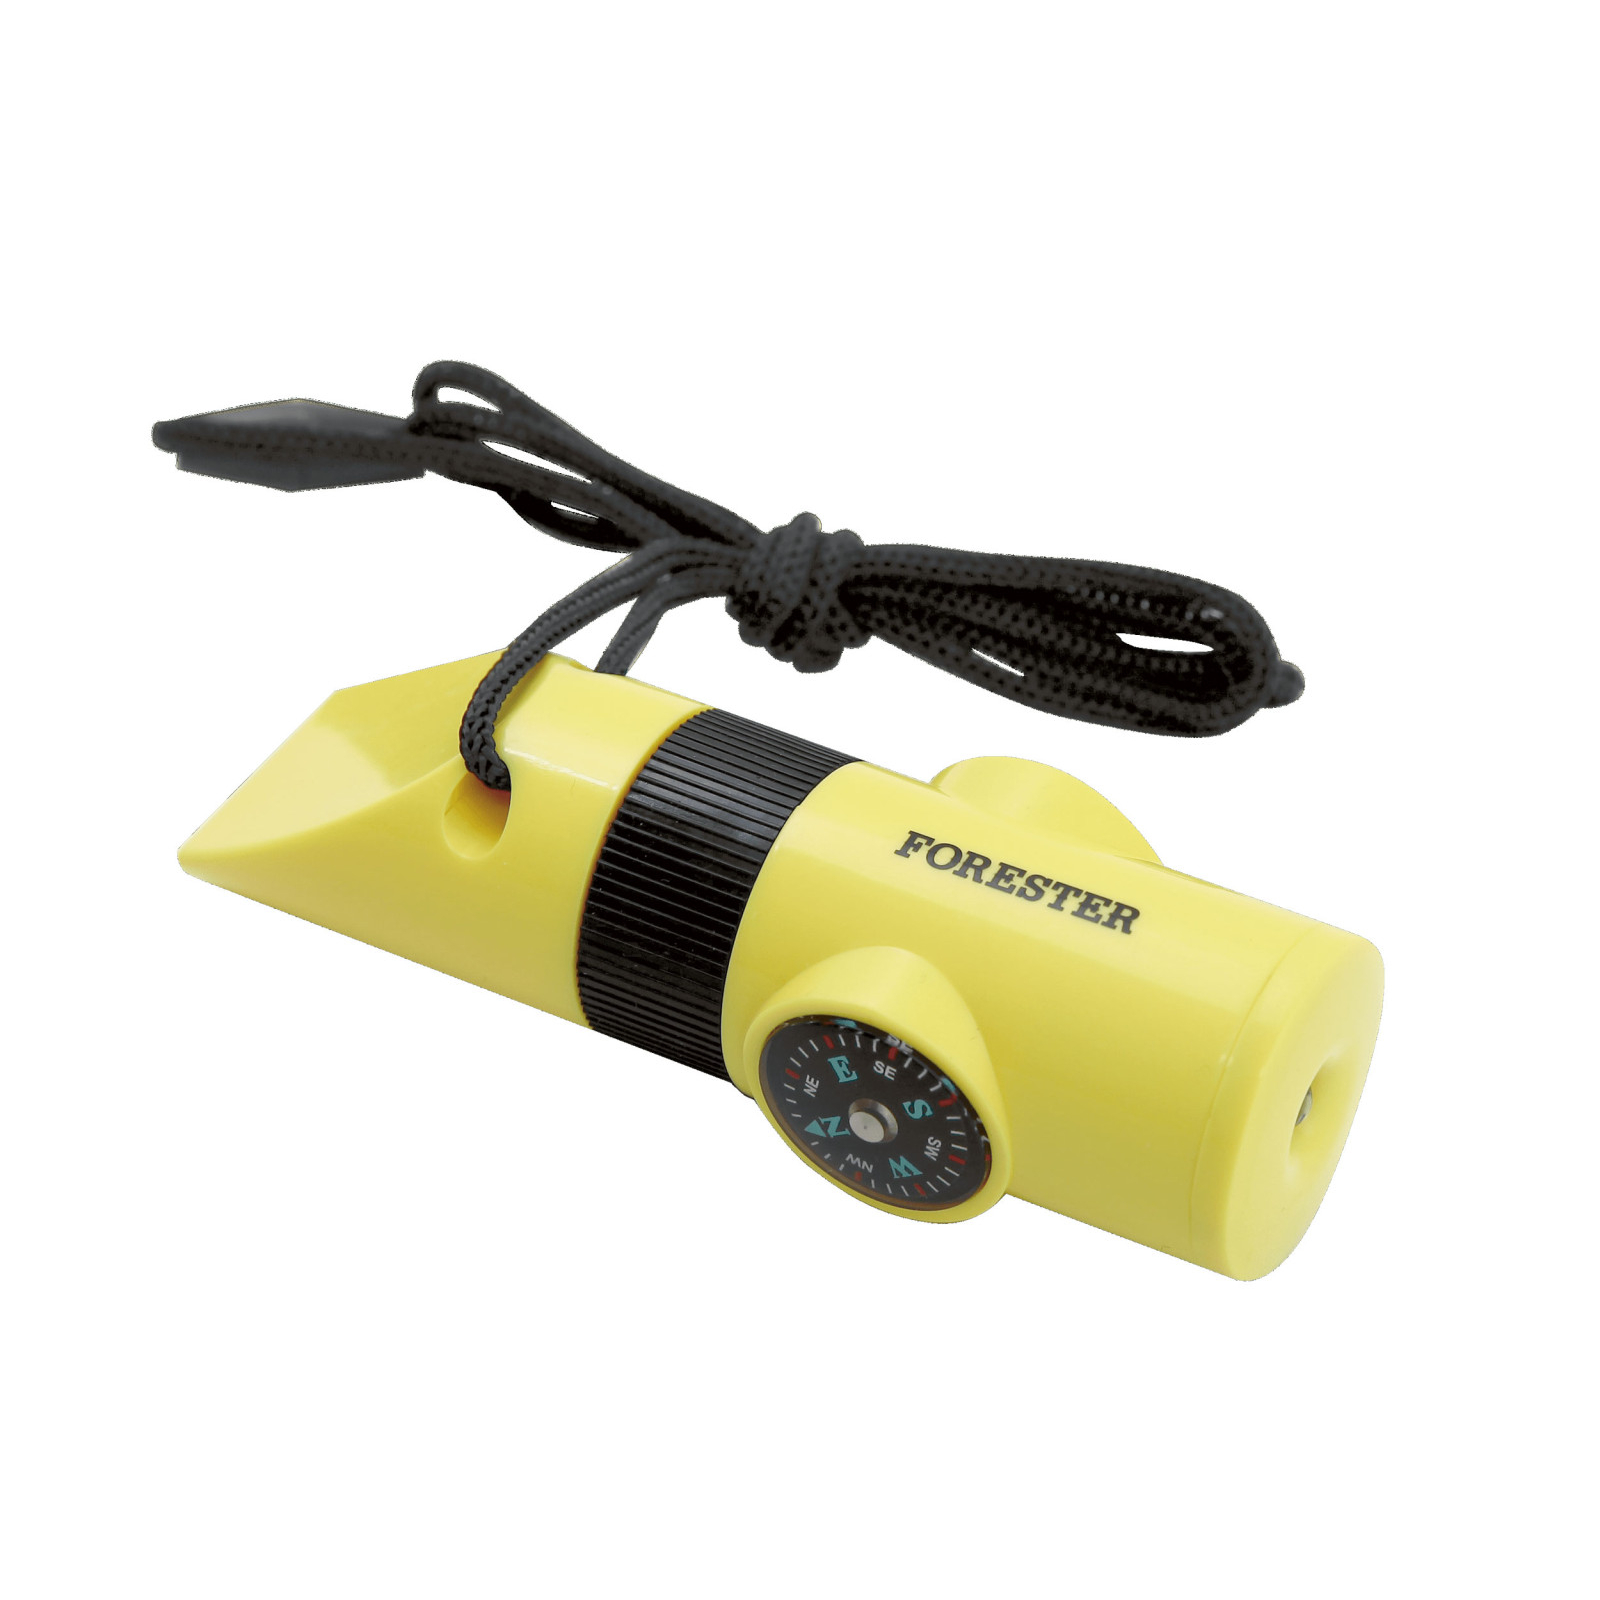 Свисток-фонарик с компасом Forester Mobile жёлтый с чёрным 10х3,3х2,8 см бинокль 2х с компасом